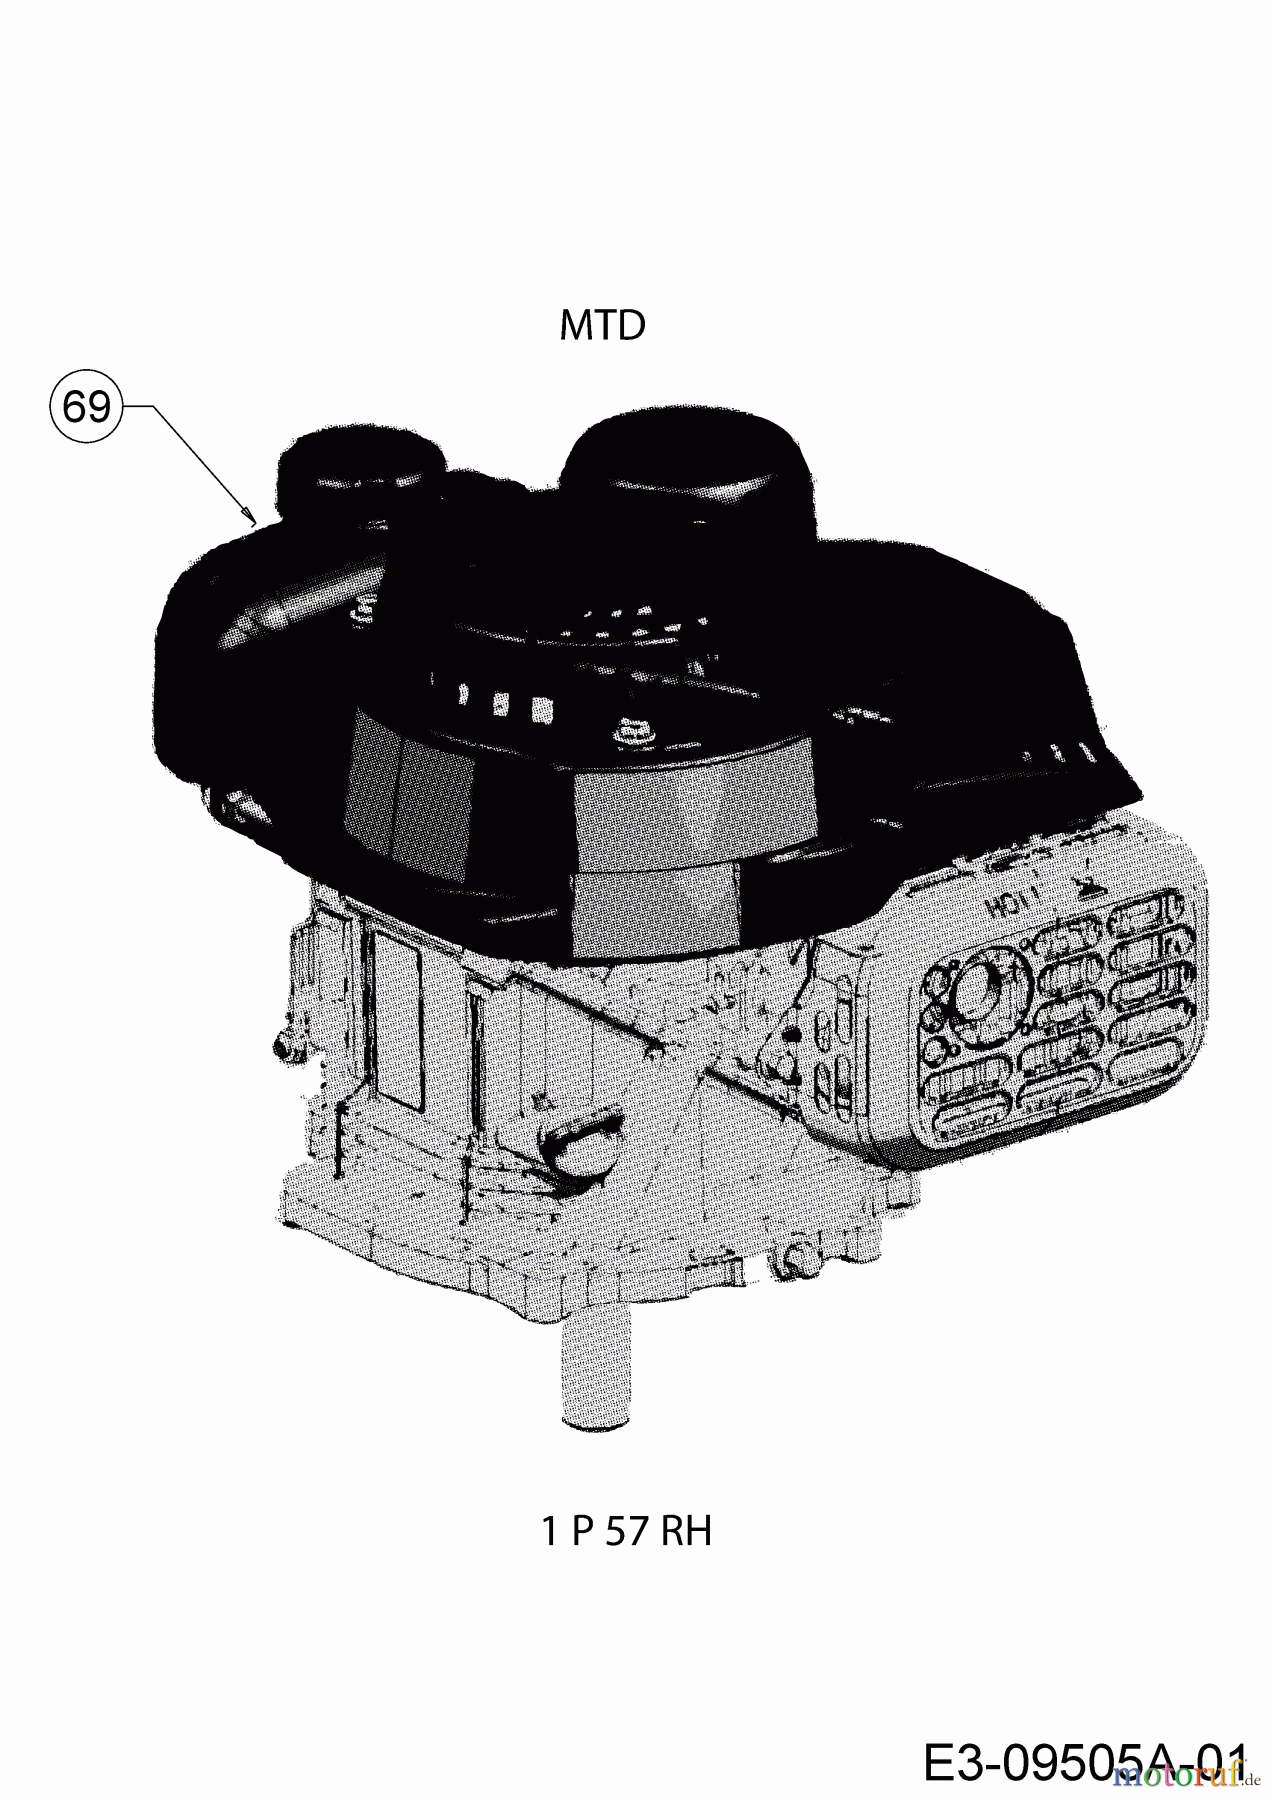  MTD Motormäher Smart 46 PO 11C-TASJ600 (2020) Motor MTD